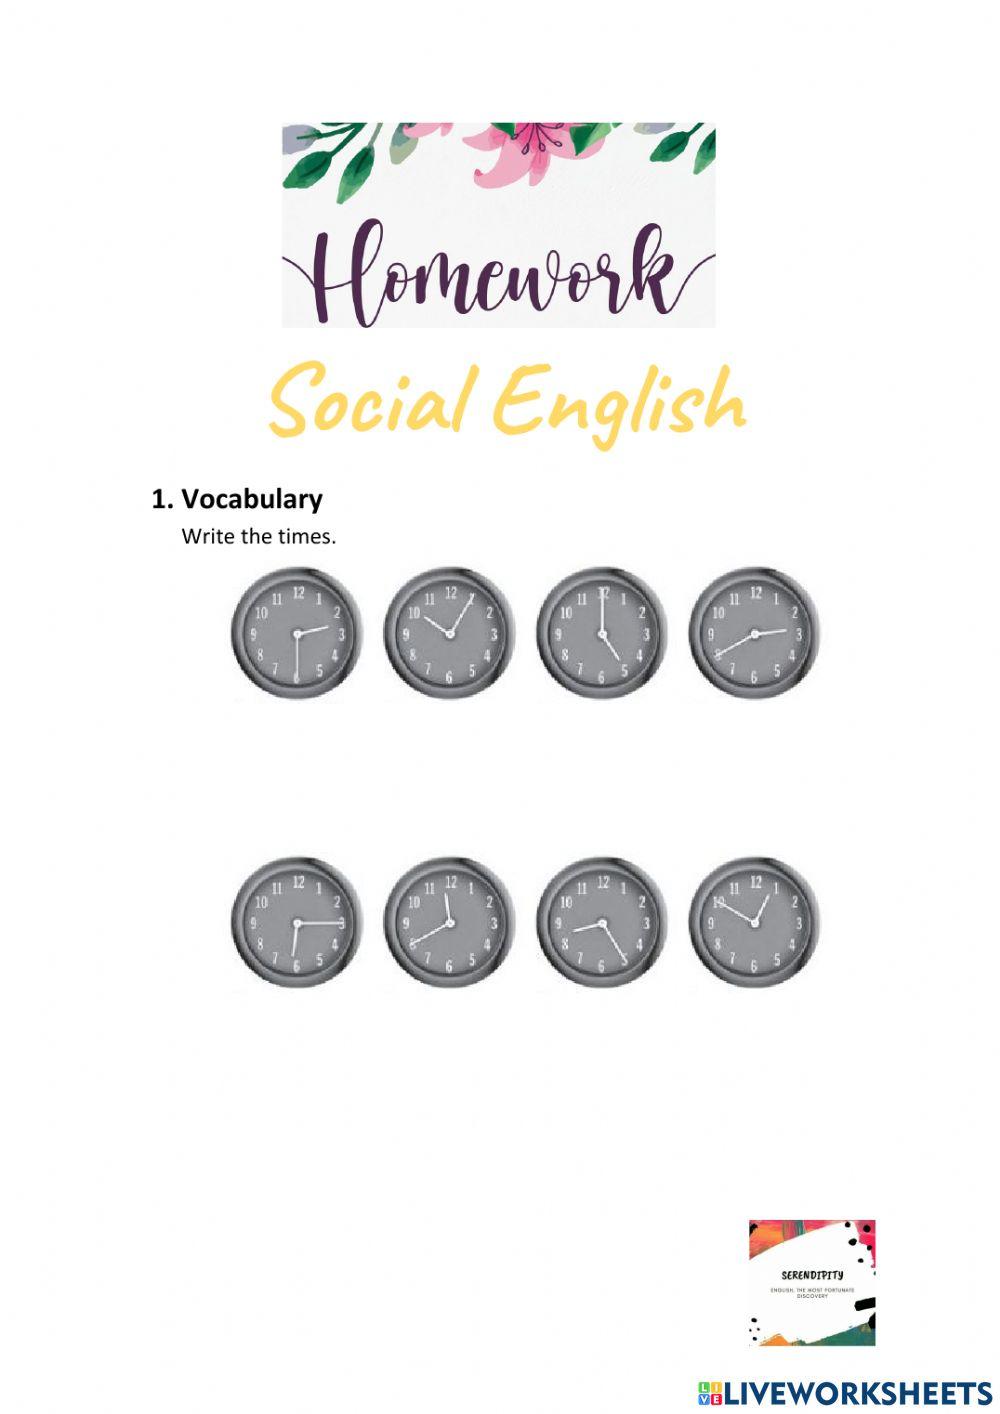 Social English 2- Homework